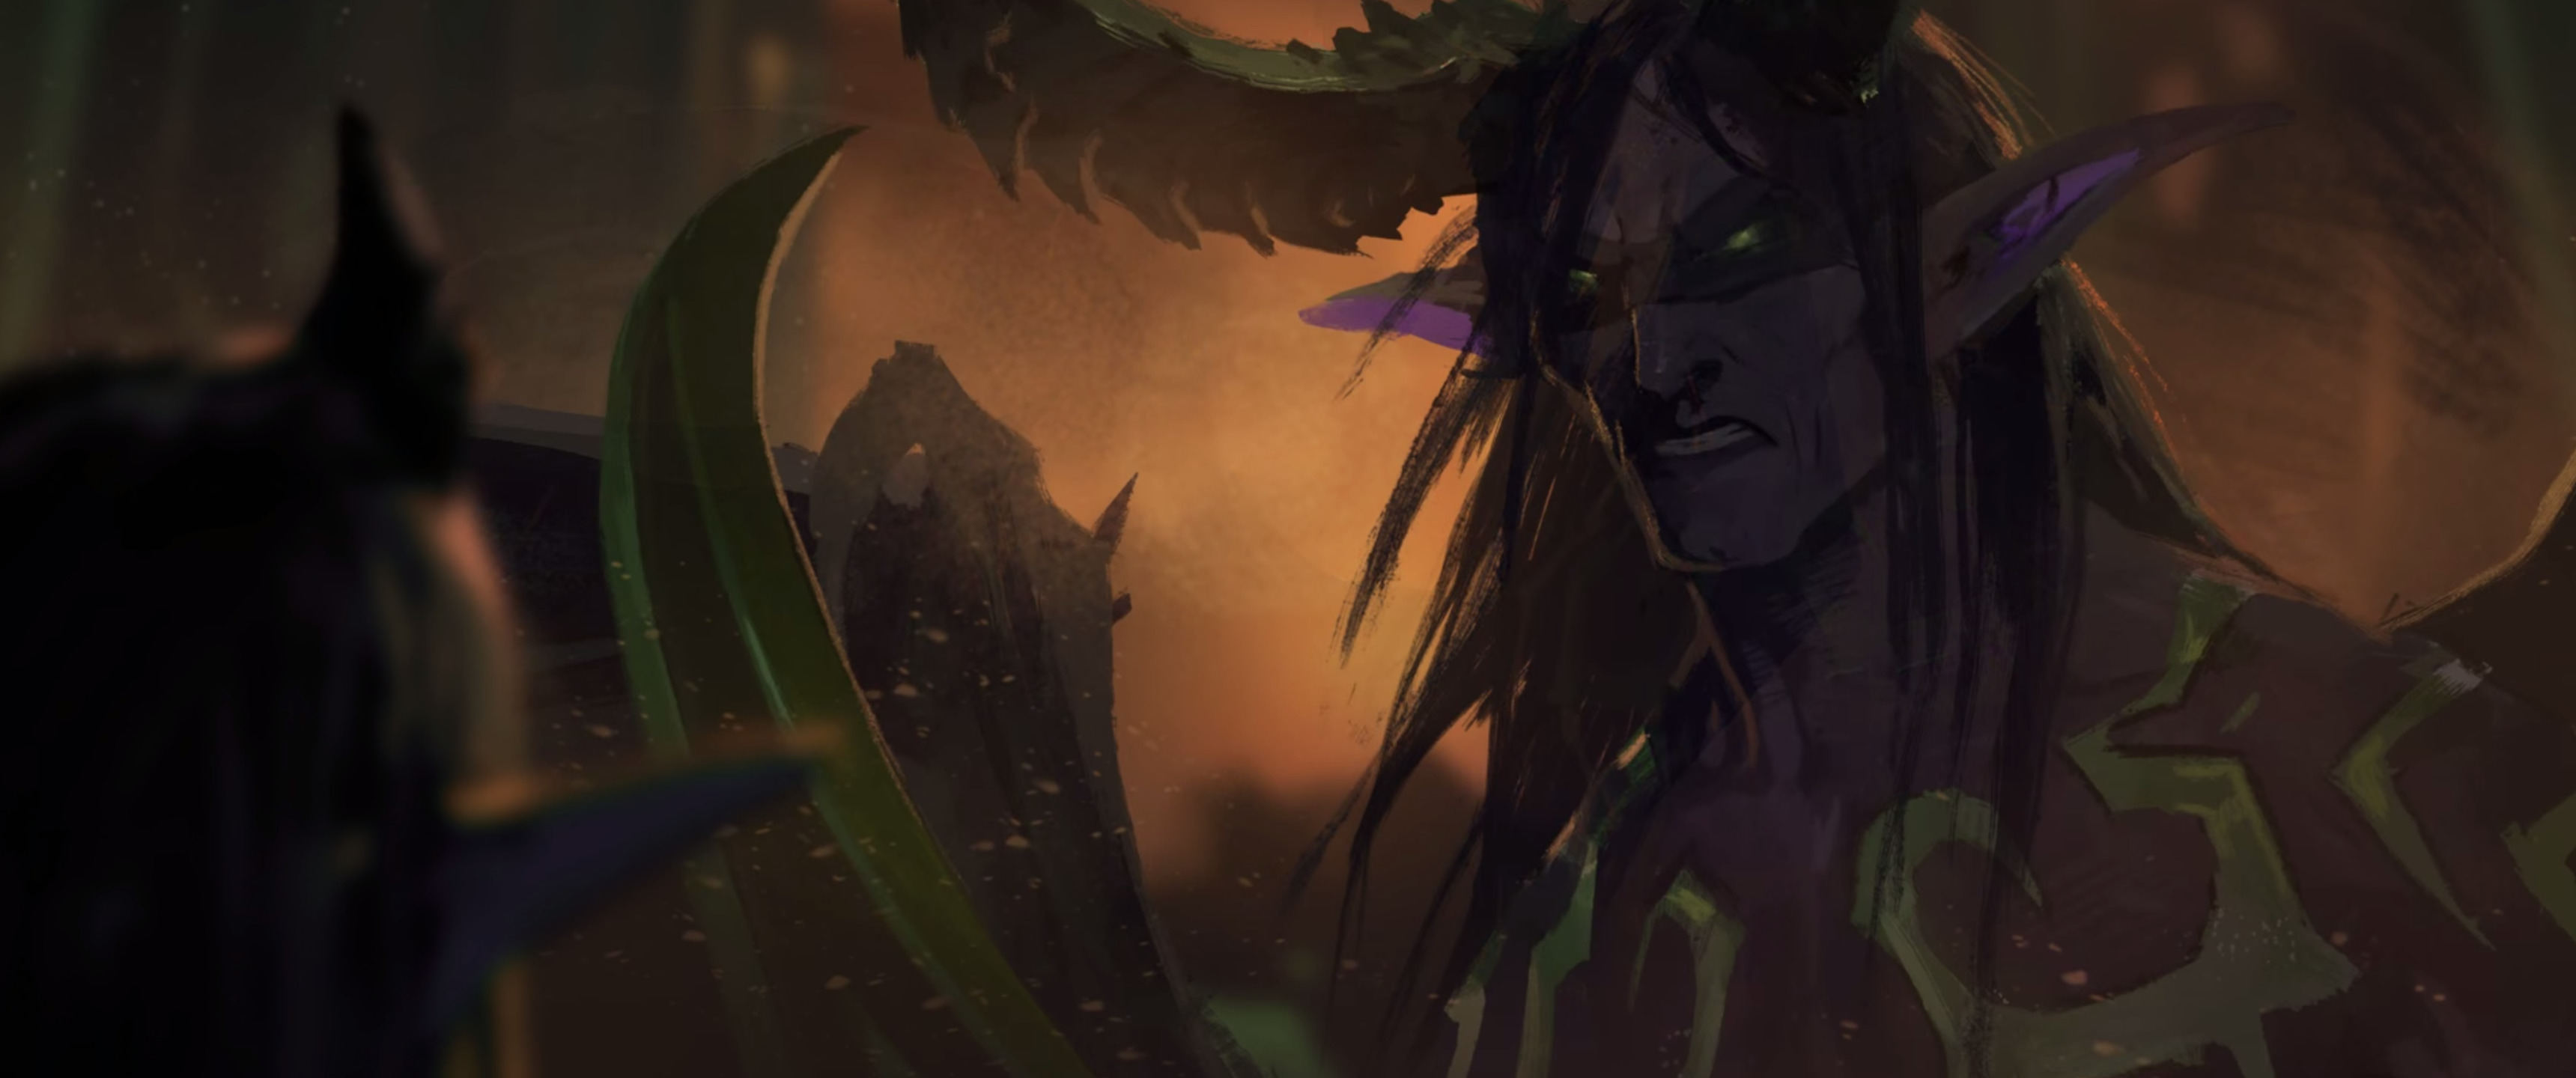 Demon Hunter, World of Warcraft, Blizzard Entertainment, Illidan Stormrage Wallpaper